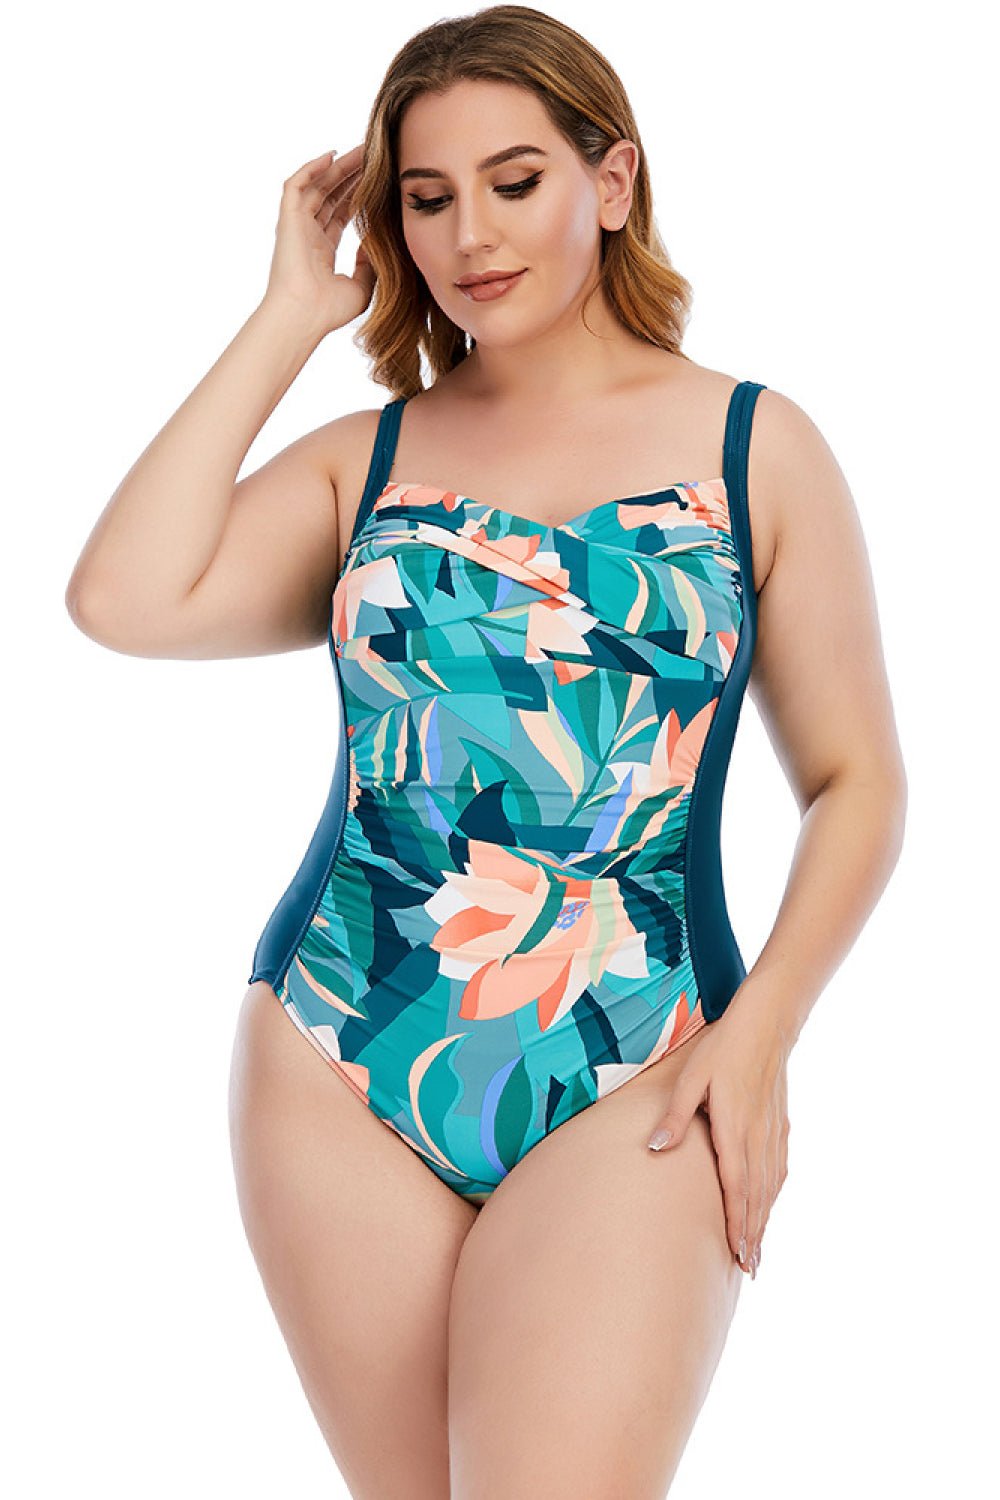 Carol Floral Crisscross One-Piece Plus Size Swimsuit  Sunset and Swim Teal M 